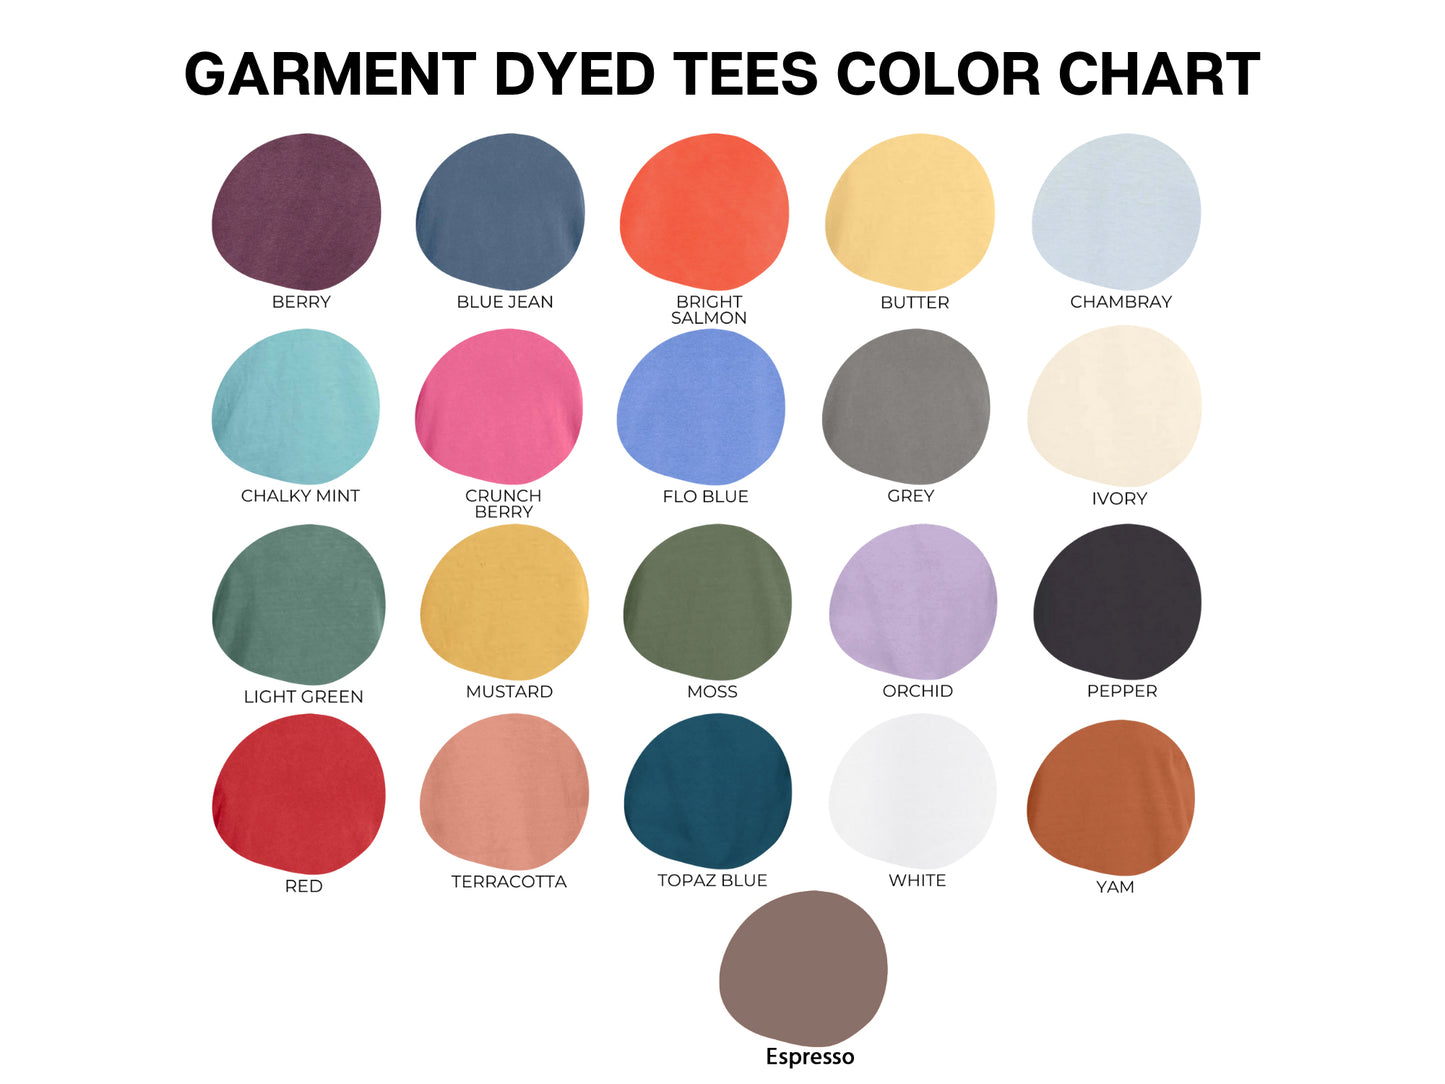 Today Choose Joy Circle | Garment Dyed Tee